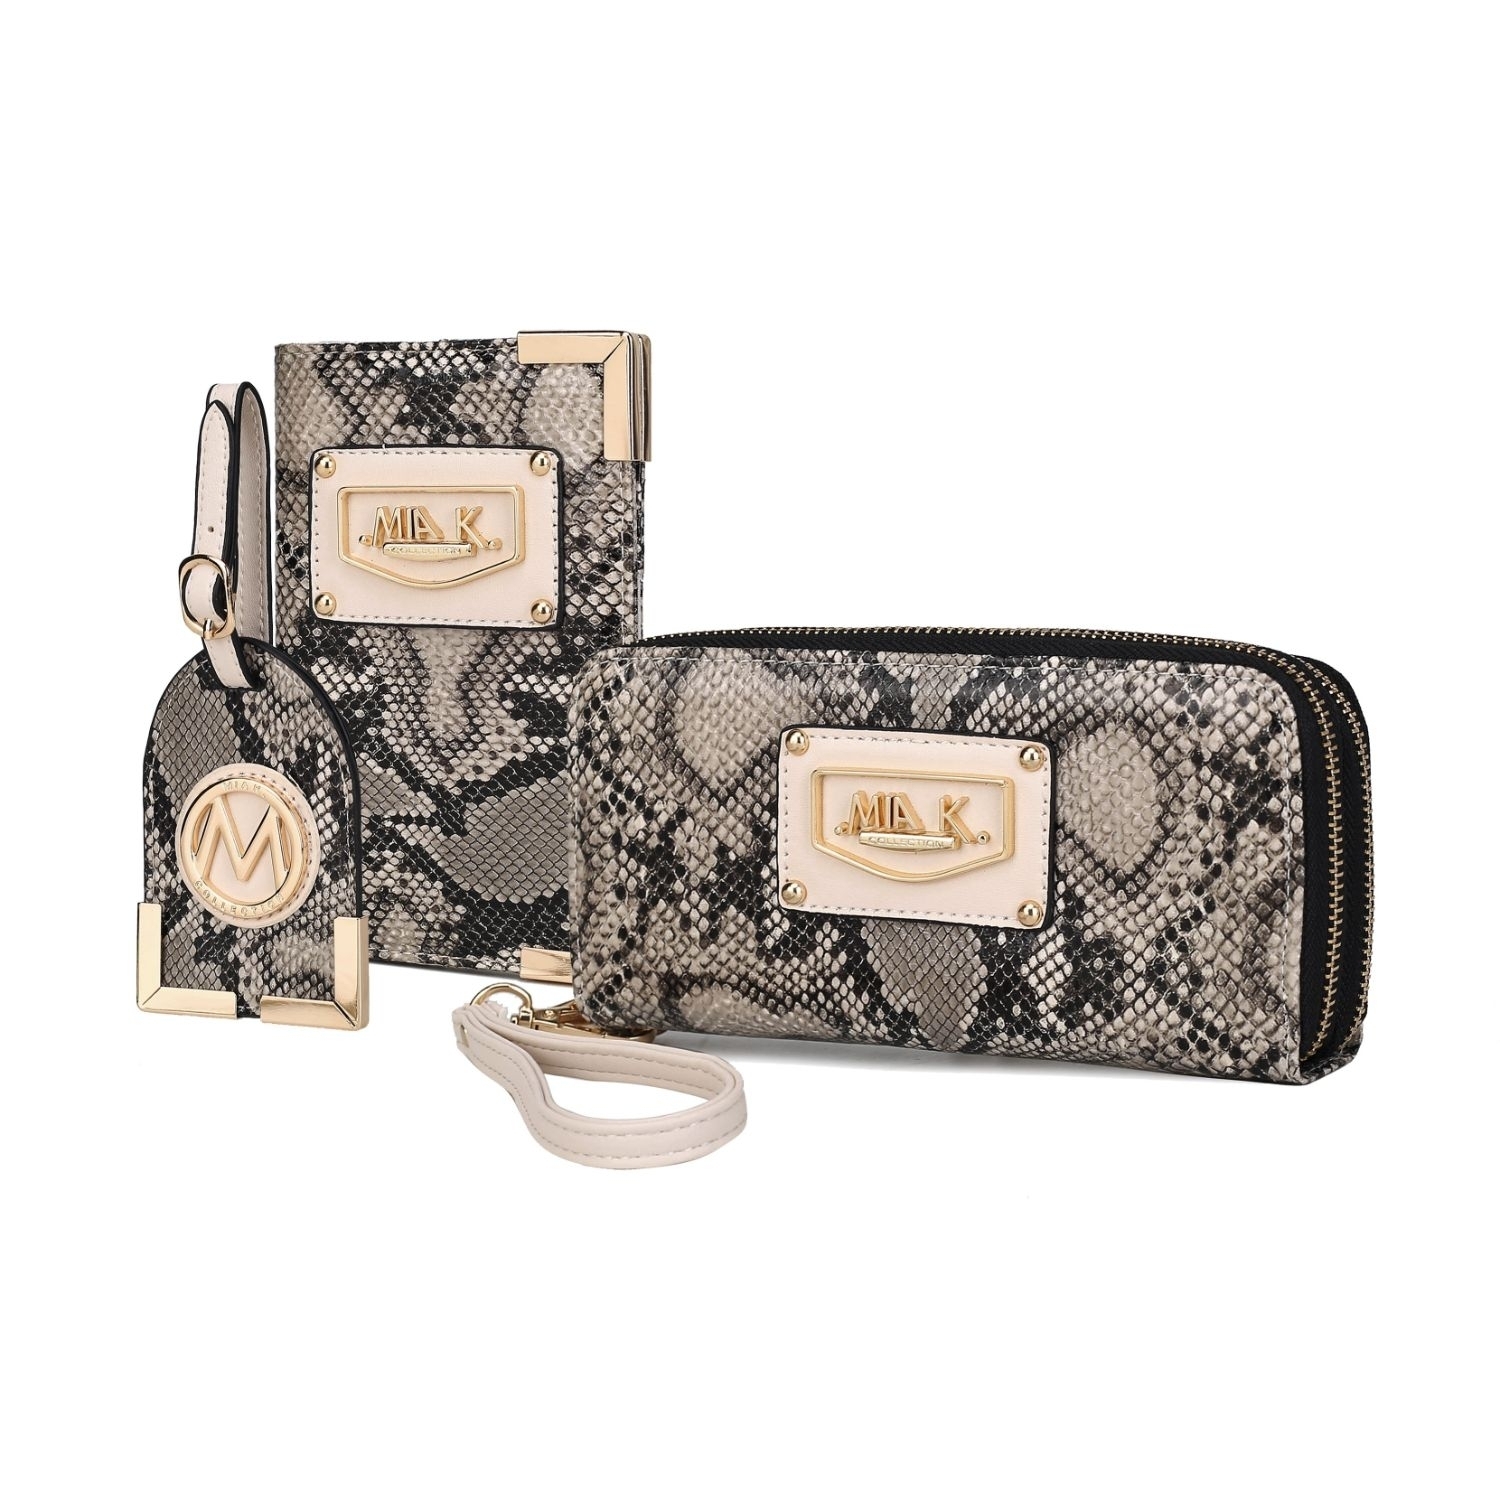 MKF Collection Darla Snake Travel Gift Set Handbag By Mia K 3 Pieces - Mustard